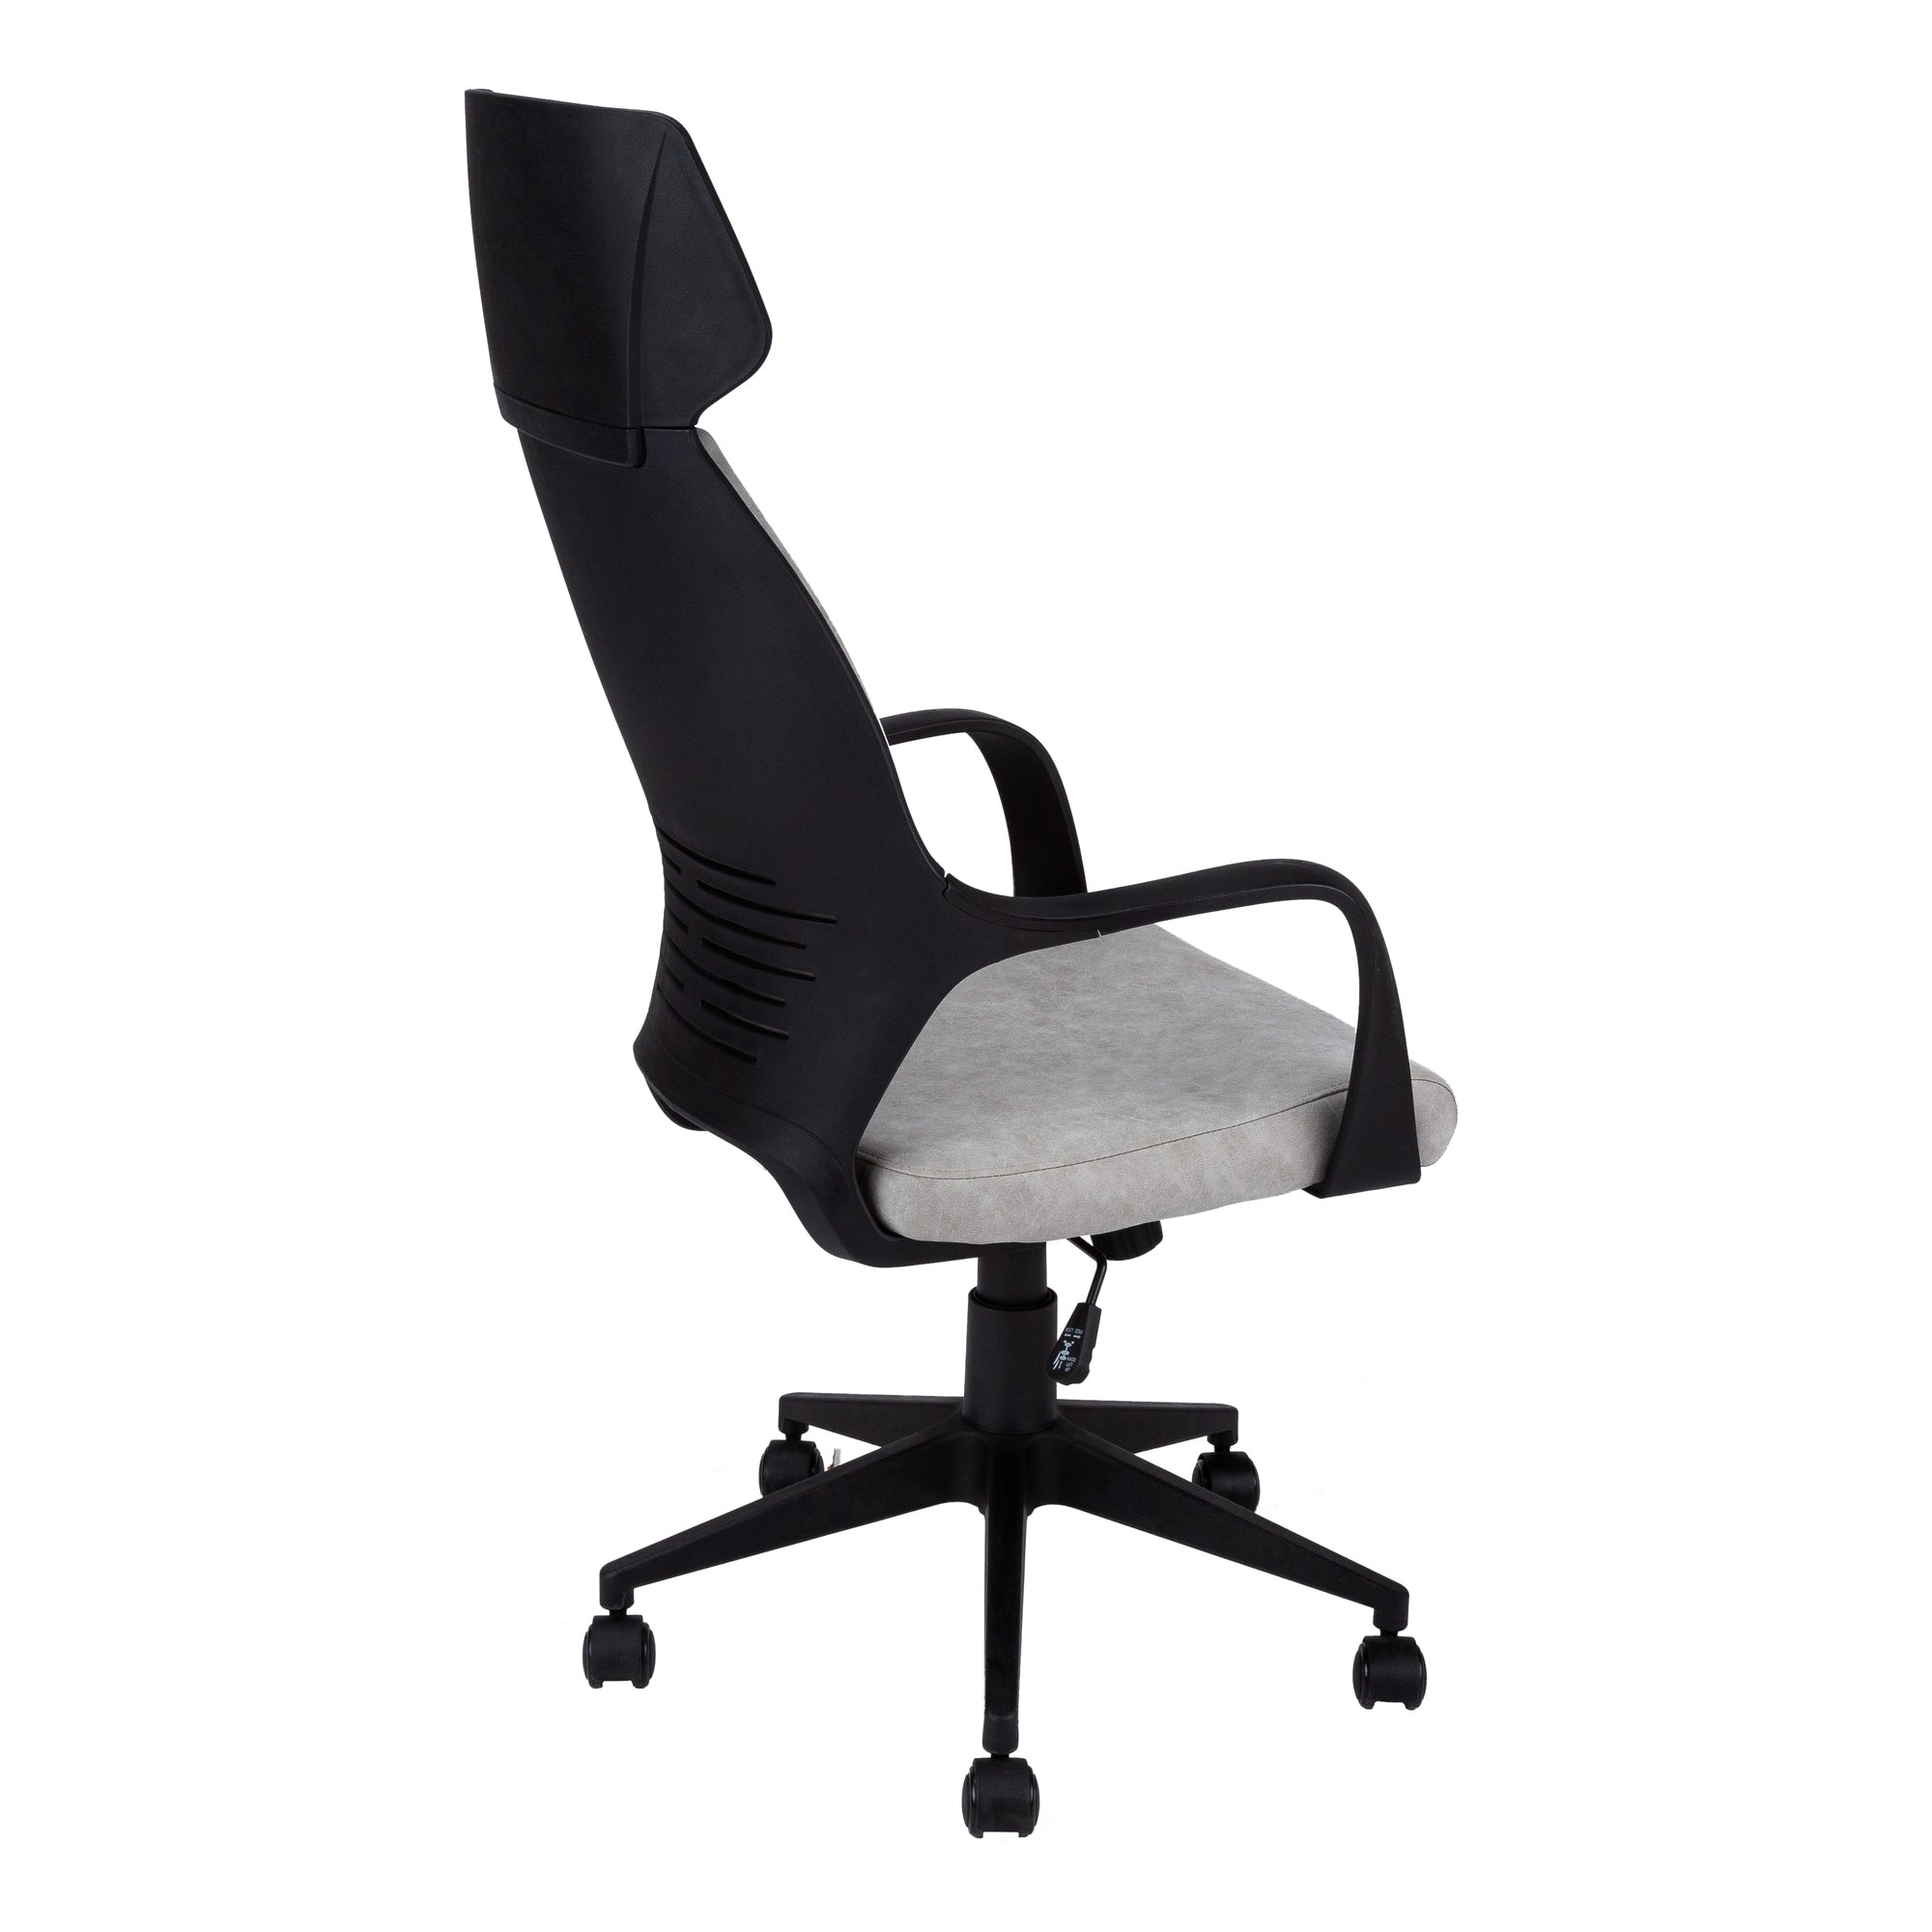 MN-687250    Office Chair, Adjustable Height, Swivel, Ergonomic, Armrests, Computer Desk, Office, Metal Base, Microfiber, Grey, Black, Contemporary, Modern